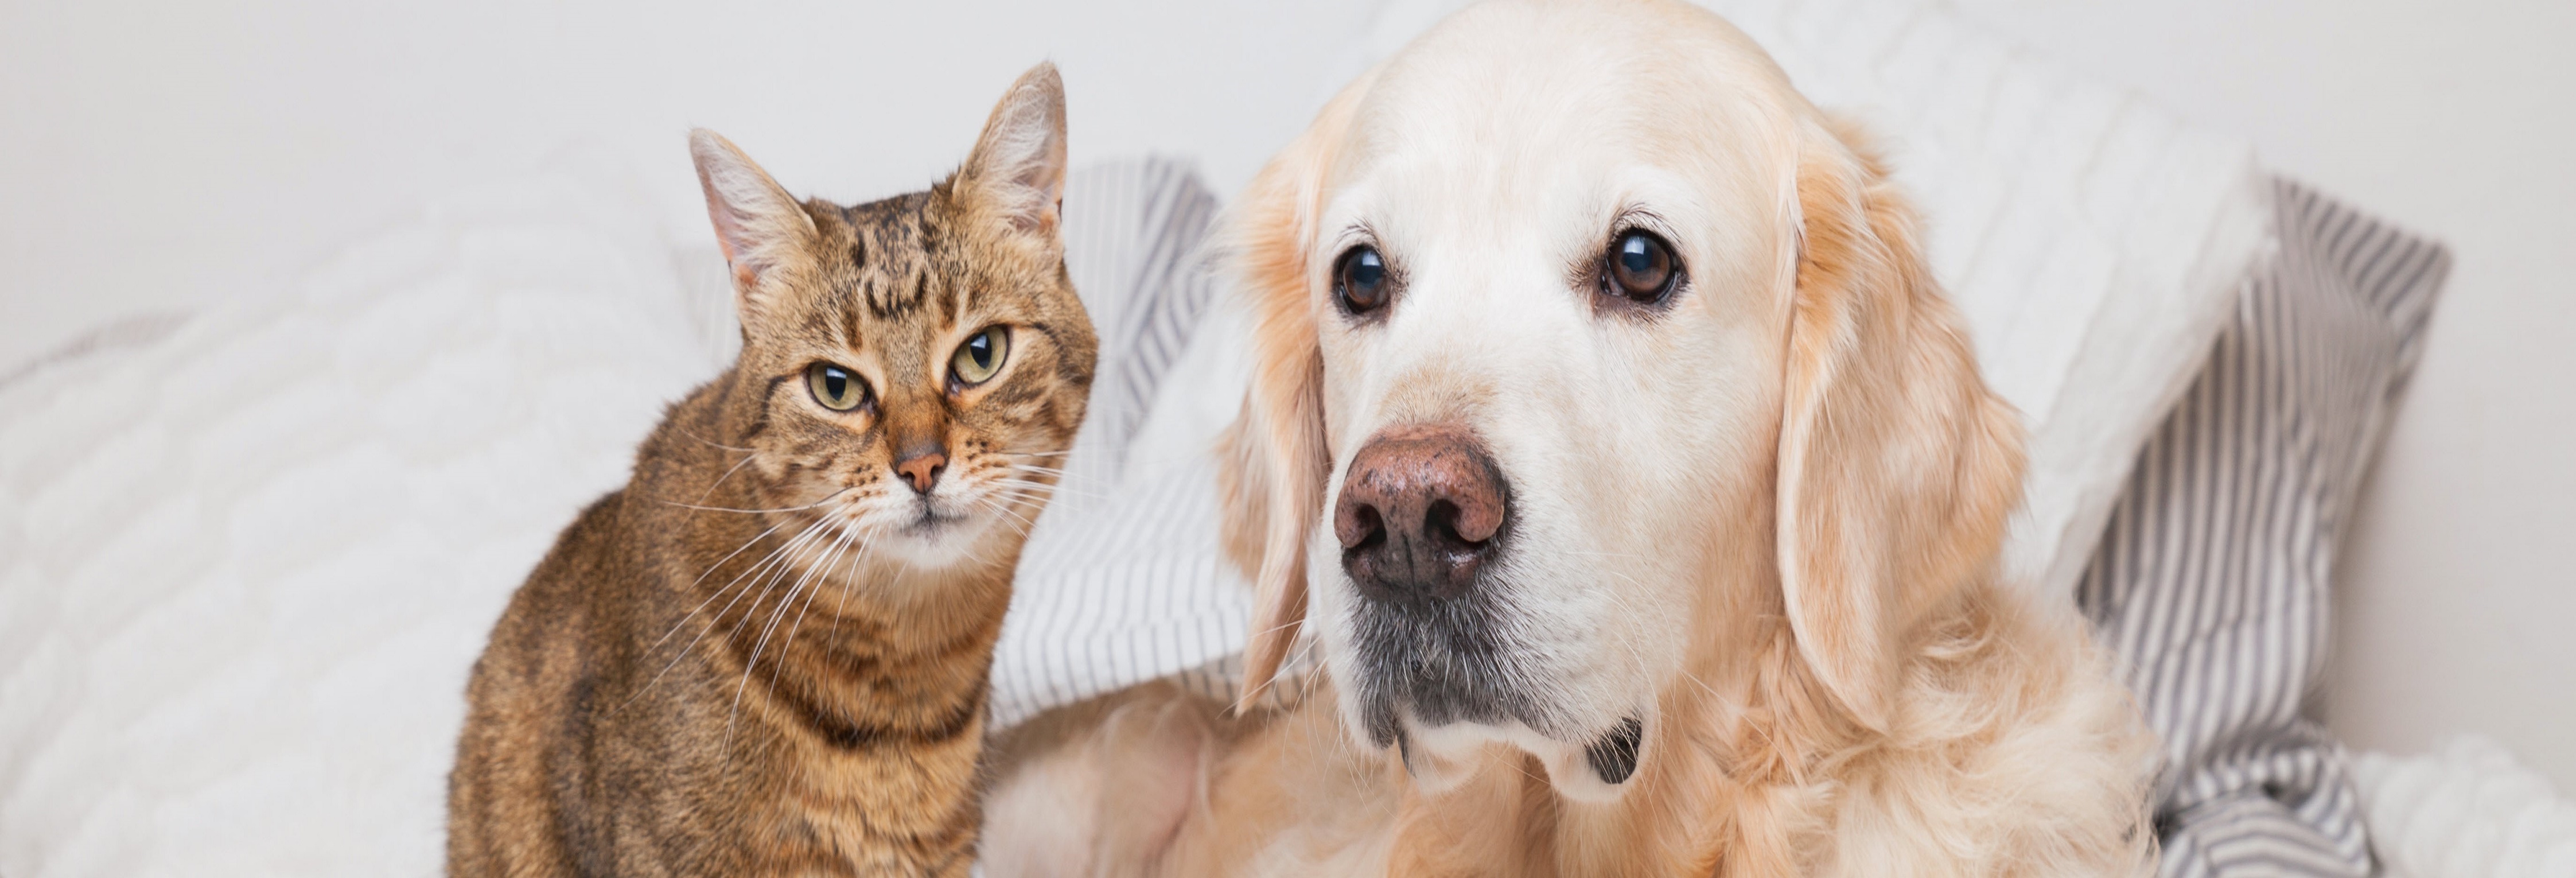 Cat and Dog Header Image